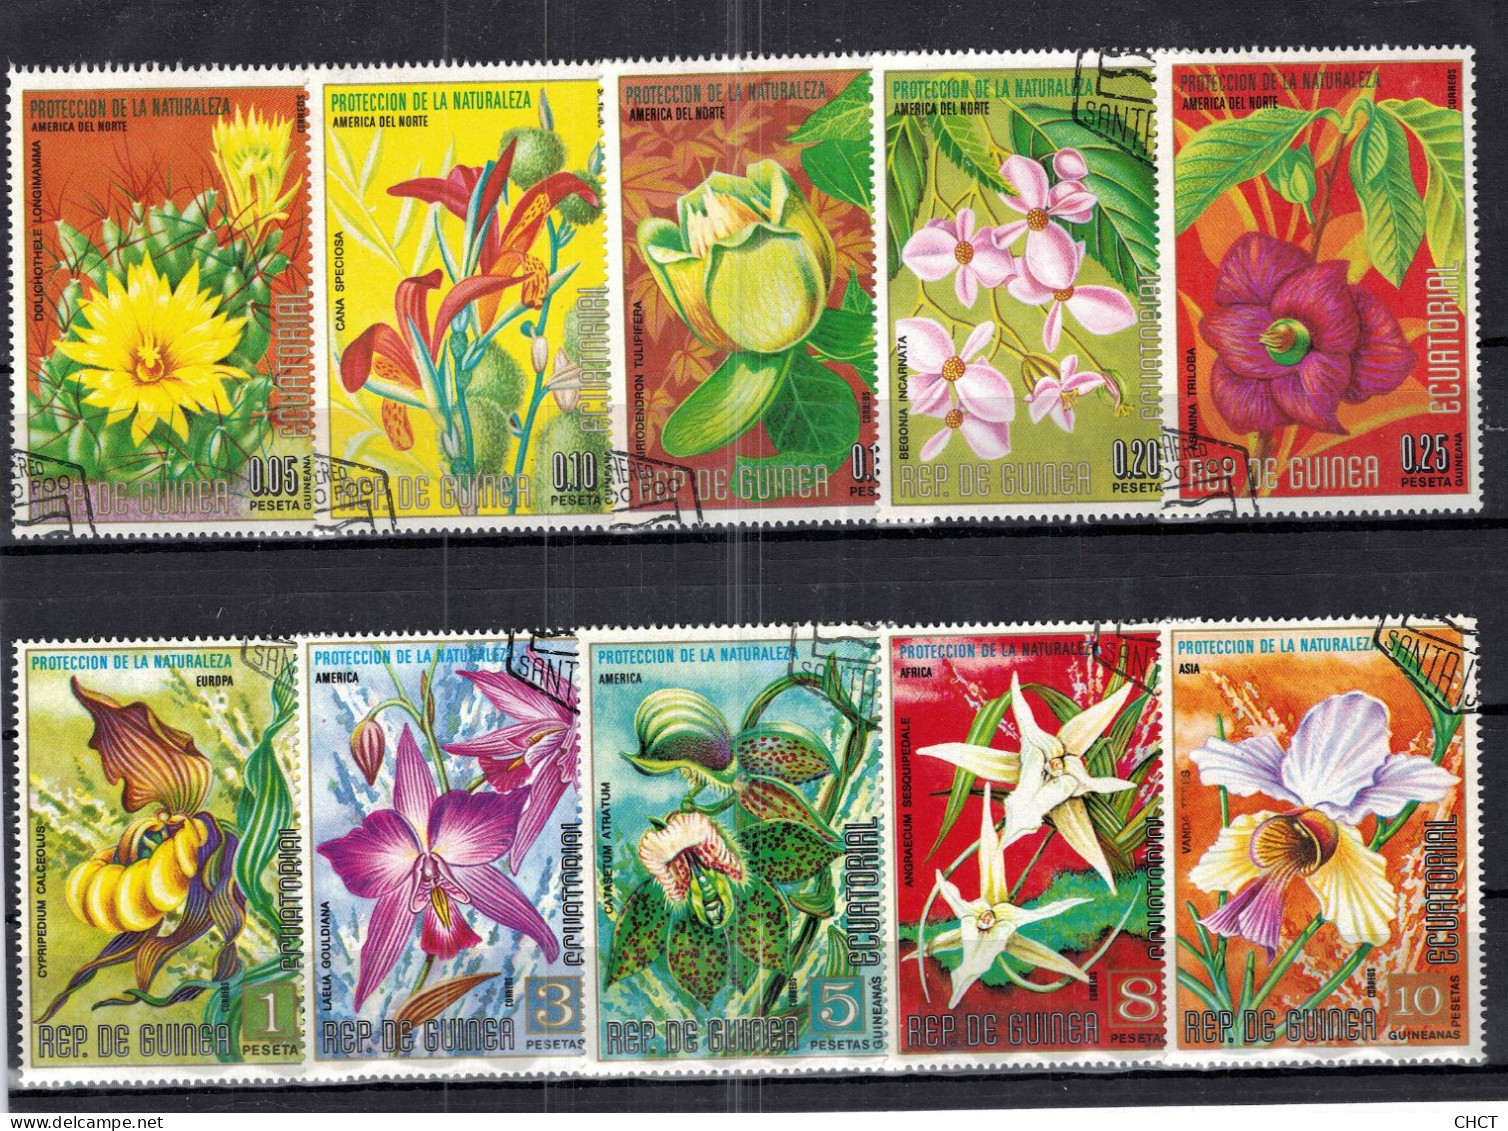 CHCT76 - Nature, Flowers, Used, Complete Series, 1974, Equatorial Guinea - Guinea Equatoriale